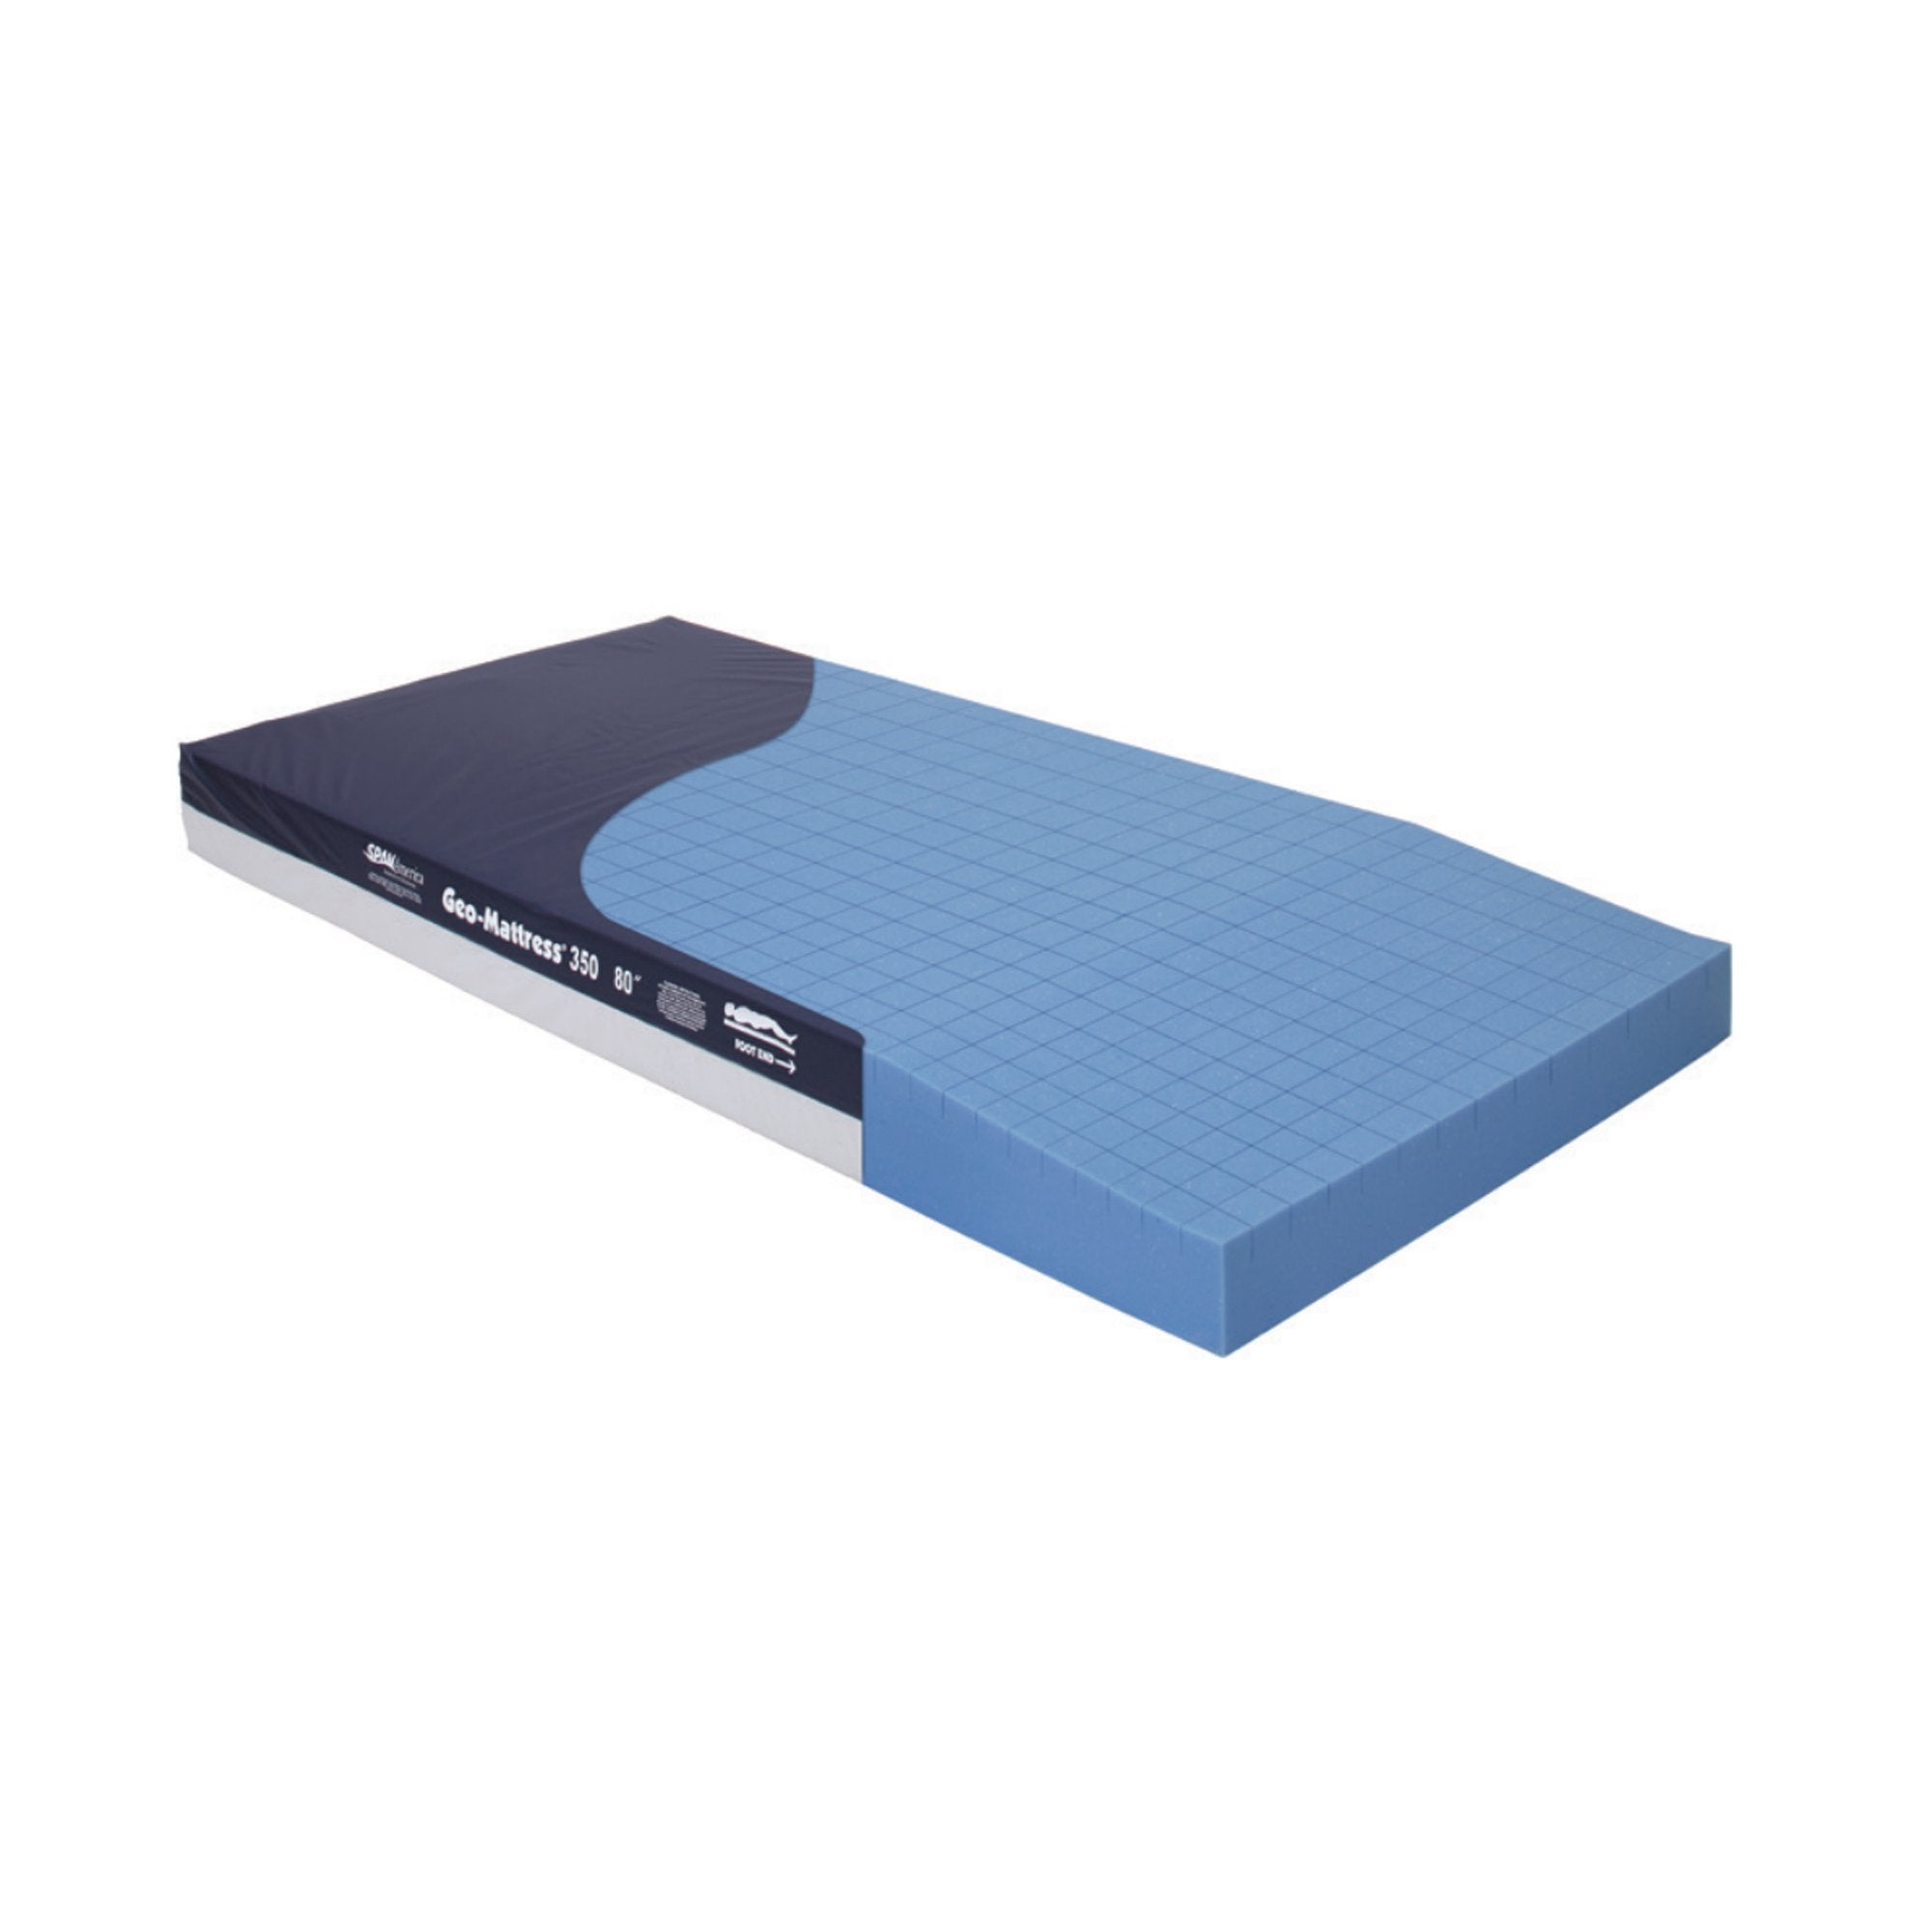 Bed Mattress Geo-Mattress® 350 Therapeutic Type 80 X 35 X 6 Inch